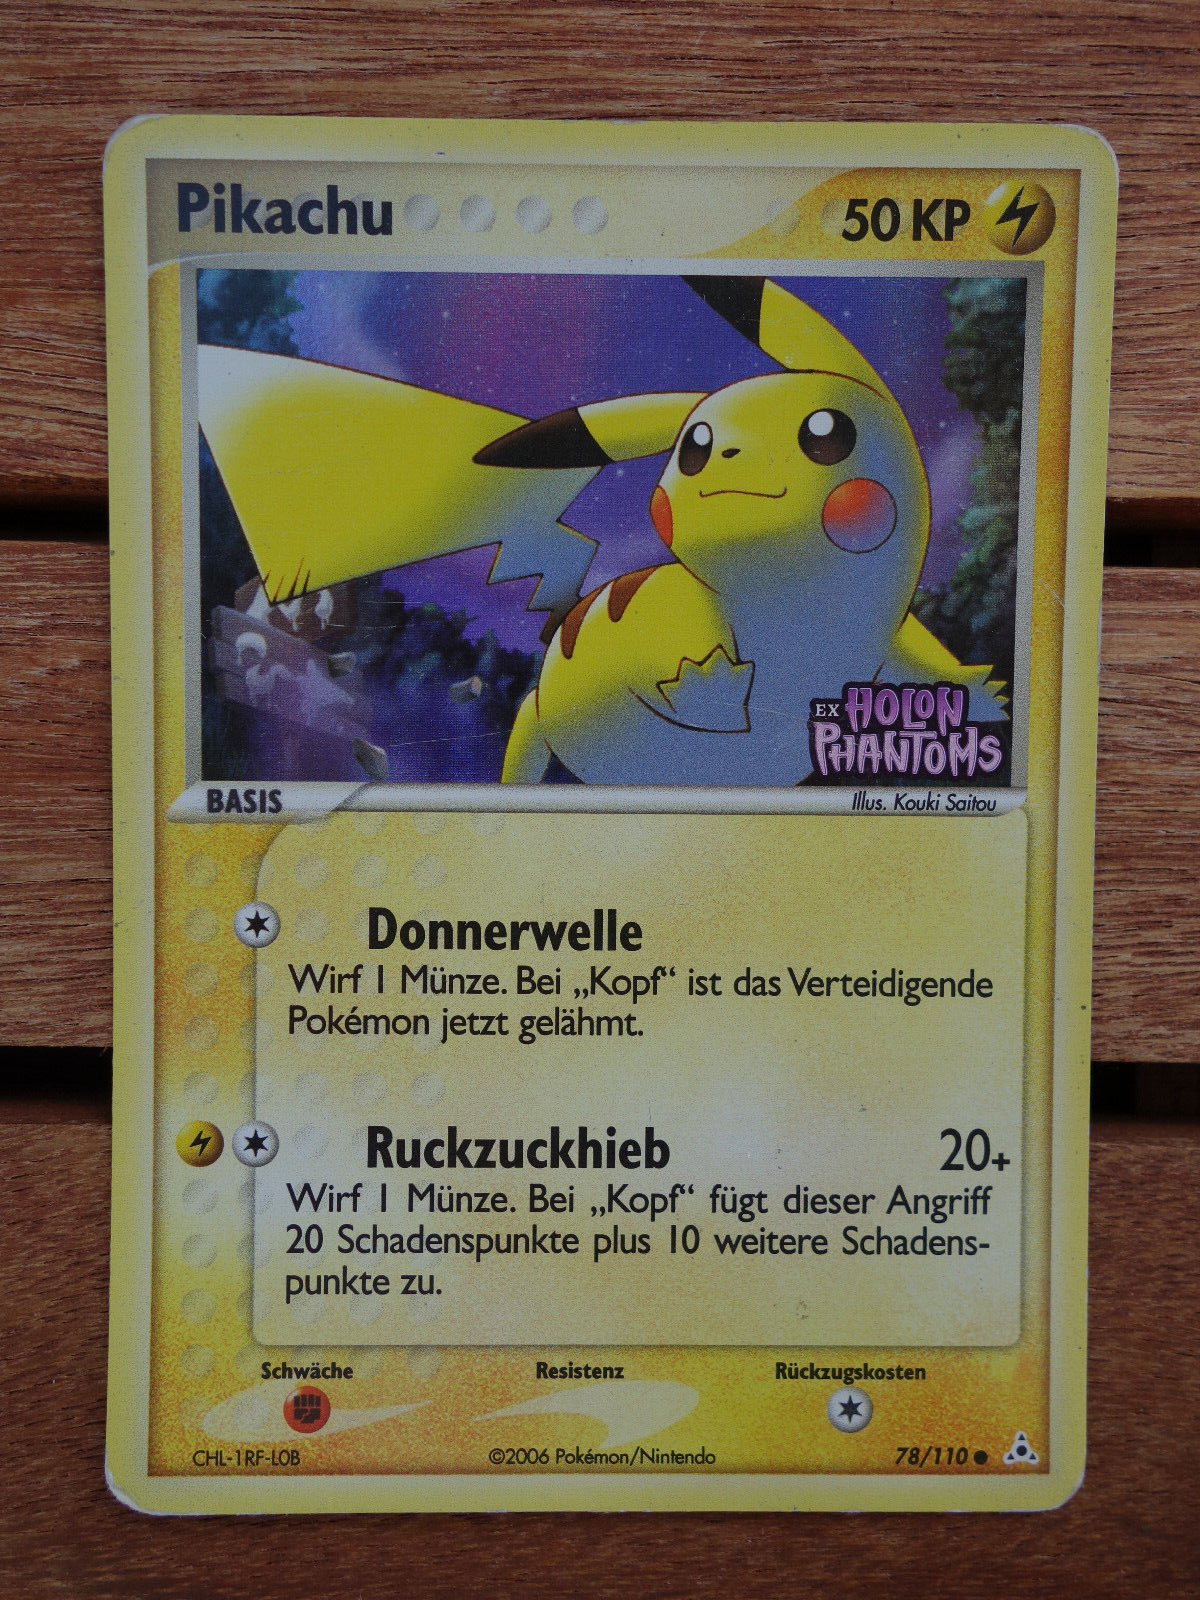 Pokemon PIKACHU EX HOLON PHANTOMS Holo Card 78/110 2006 German- - Image 1